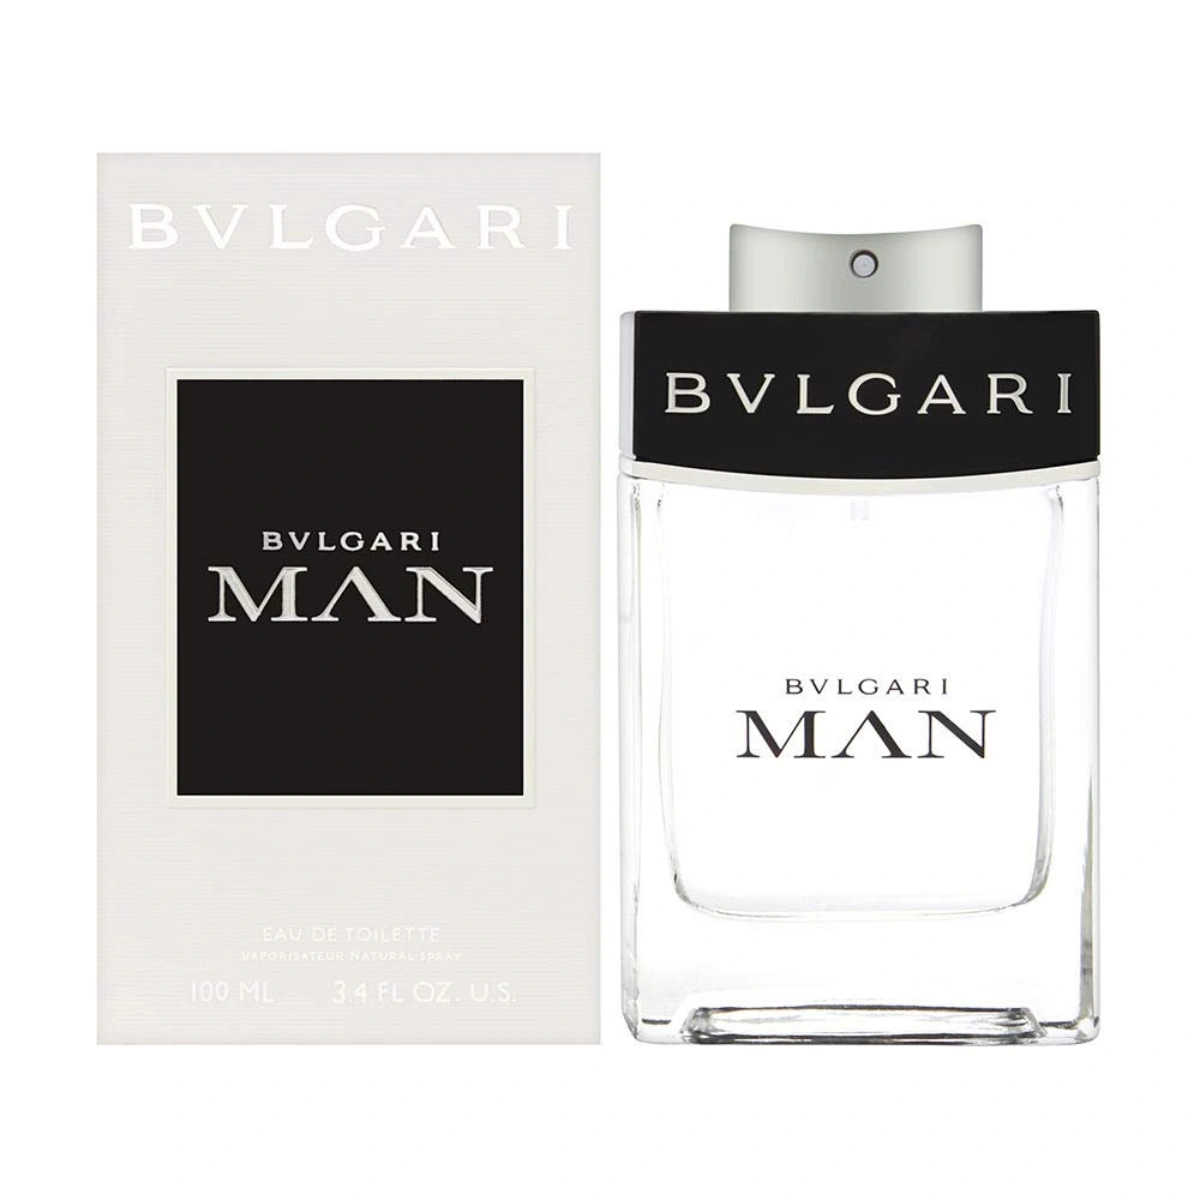 Bottle of Bvlgari Man against a minimalist background